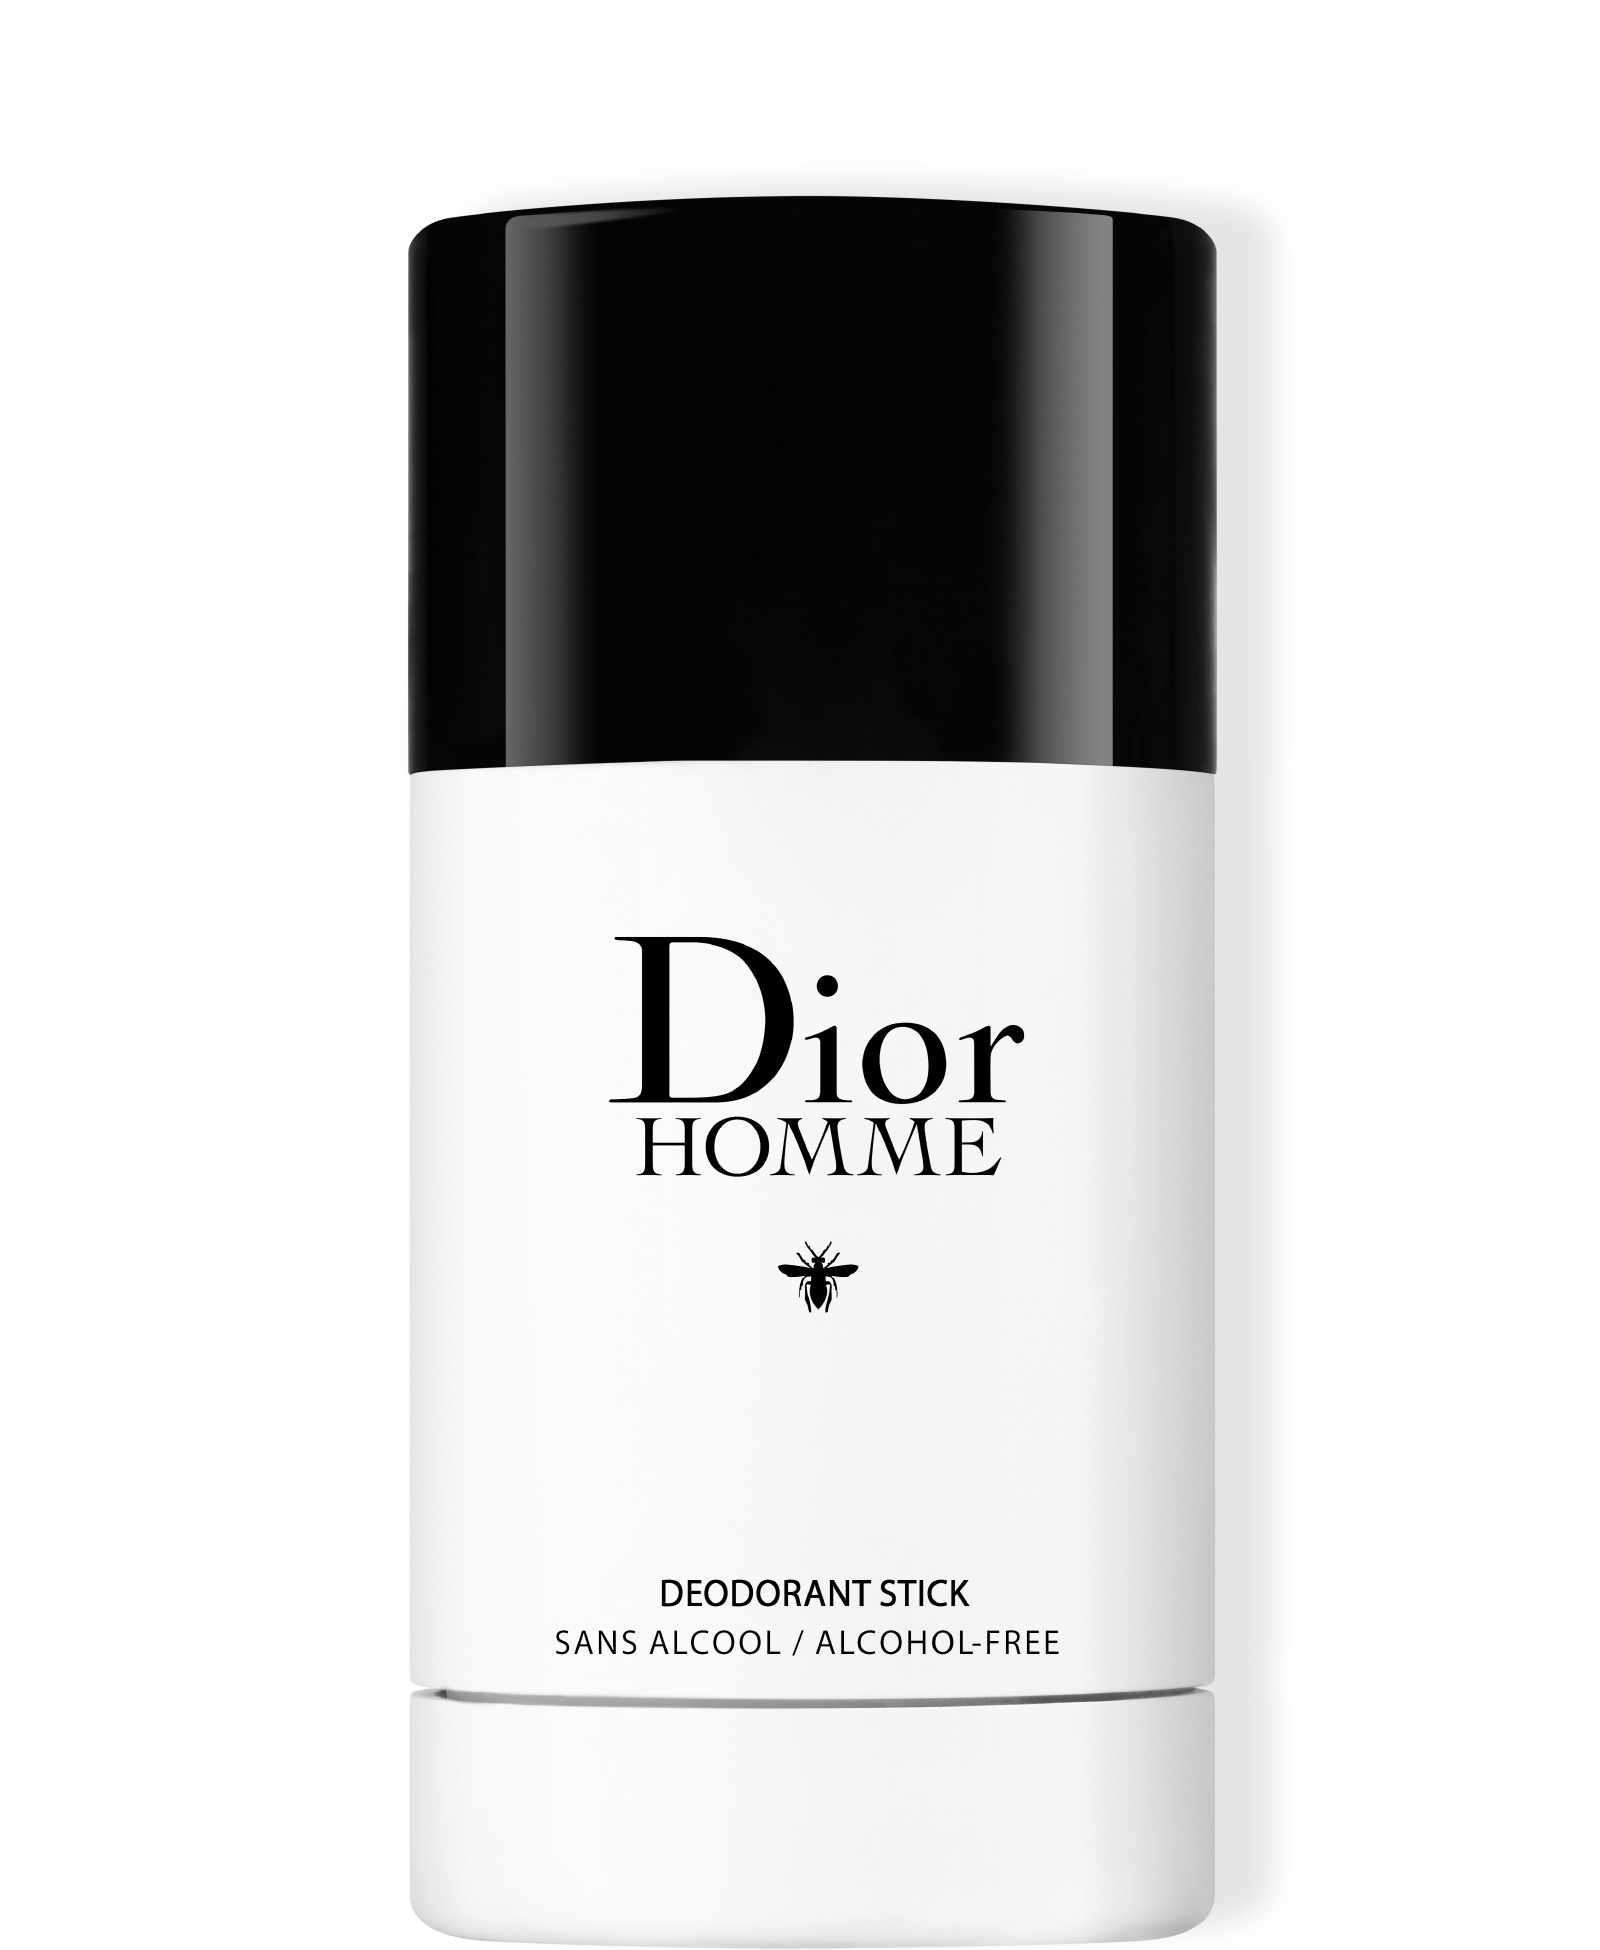  Dior Homme Deodorant stick, 75 g